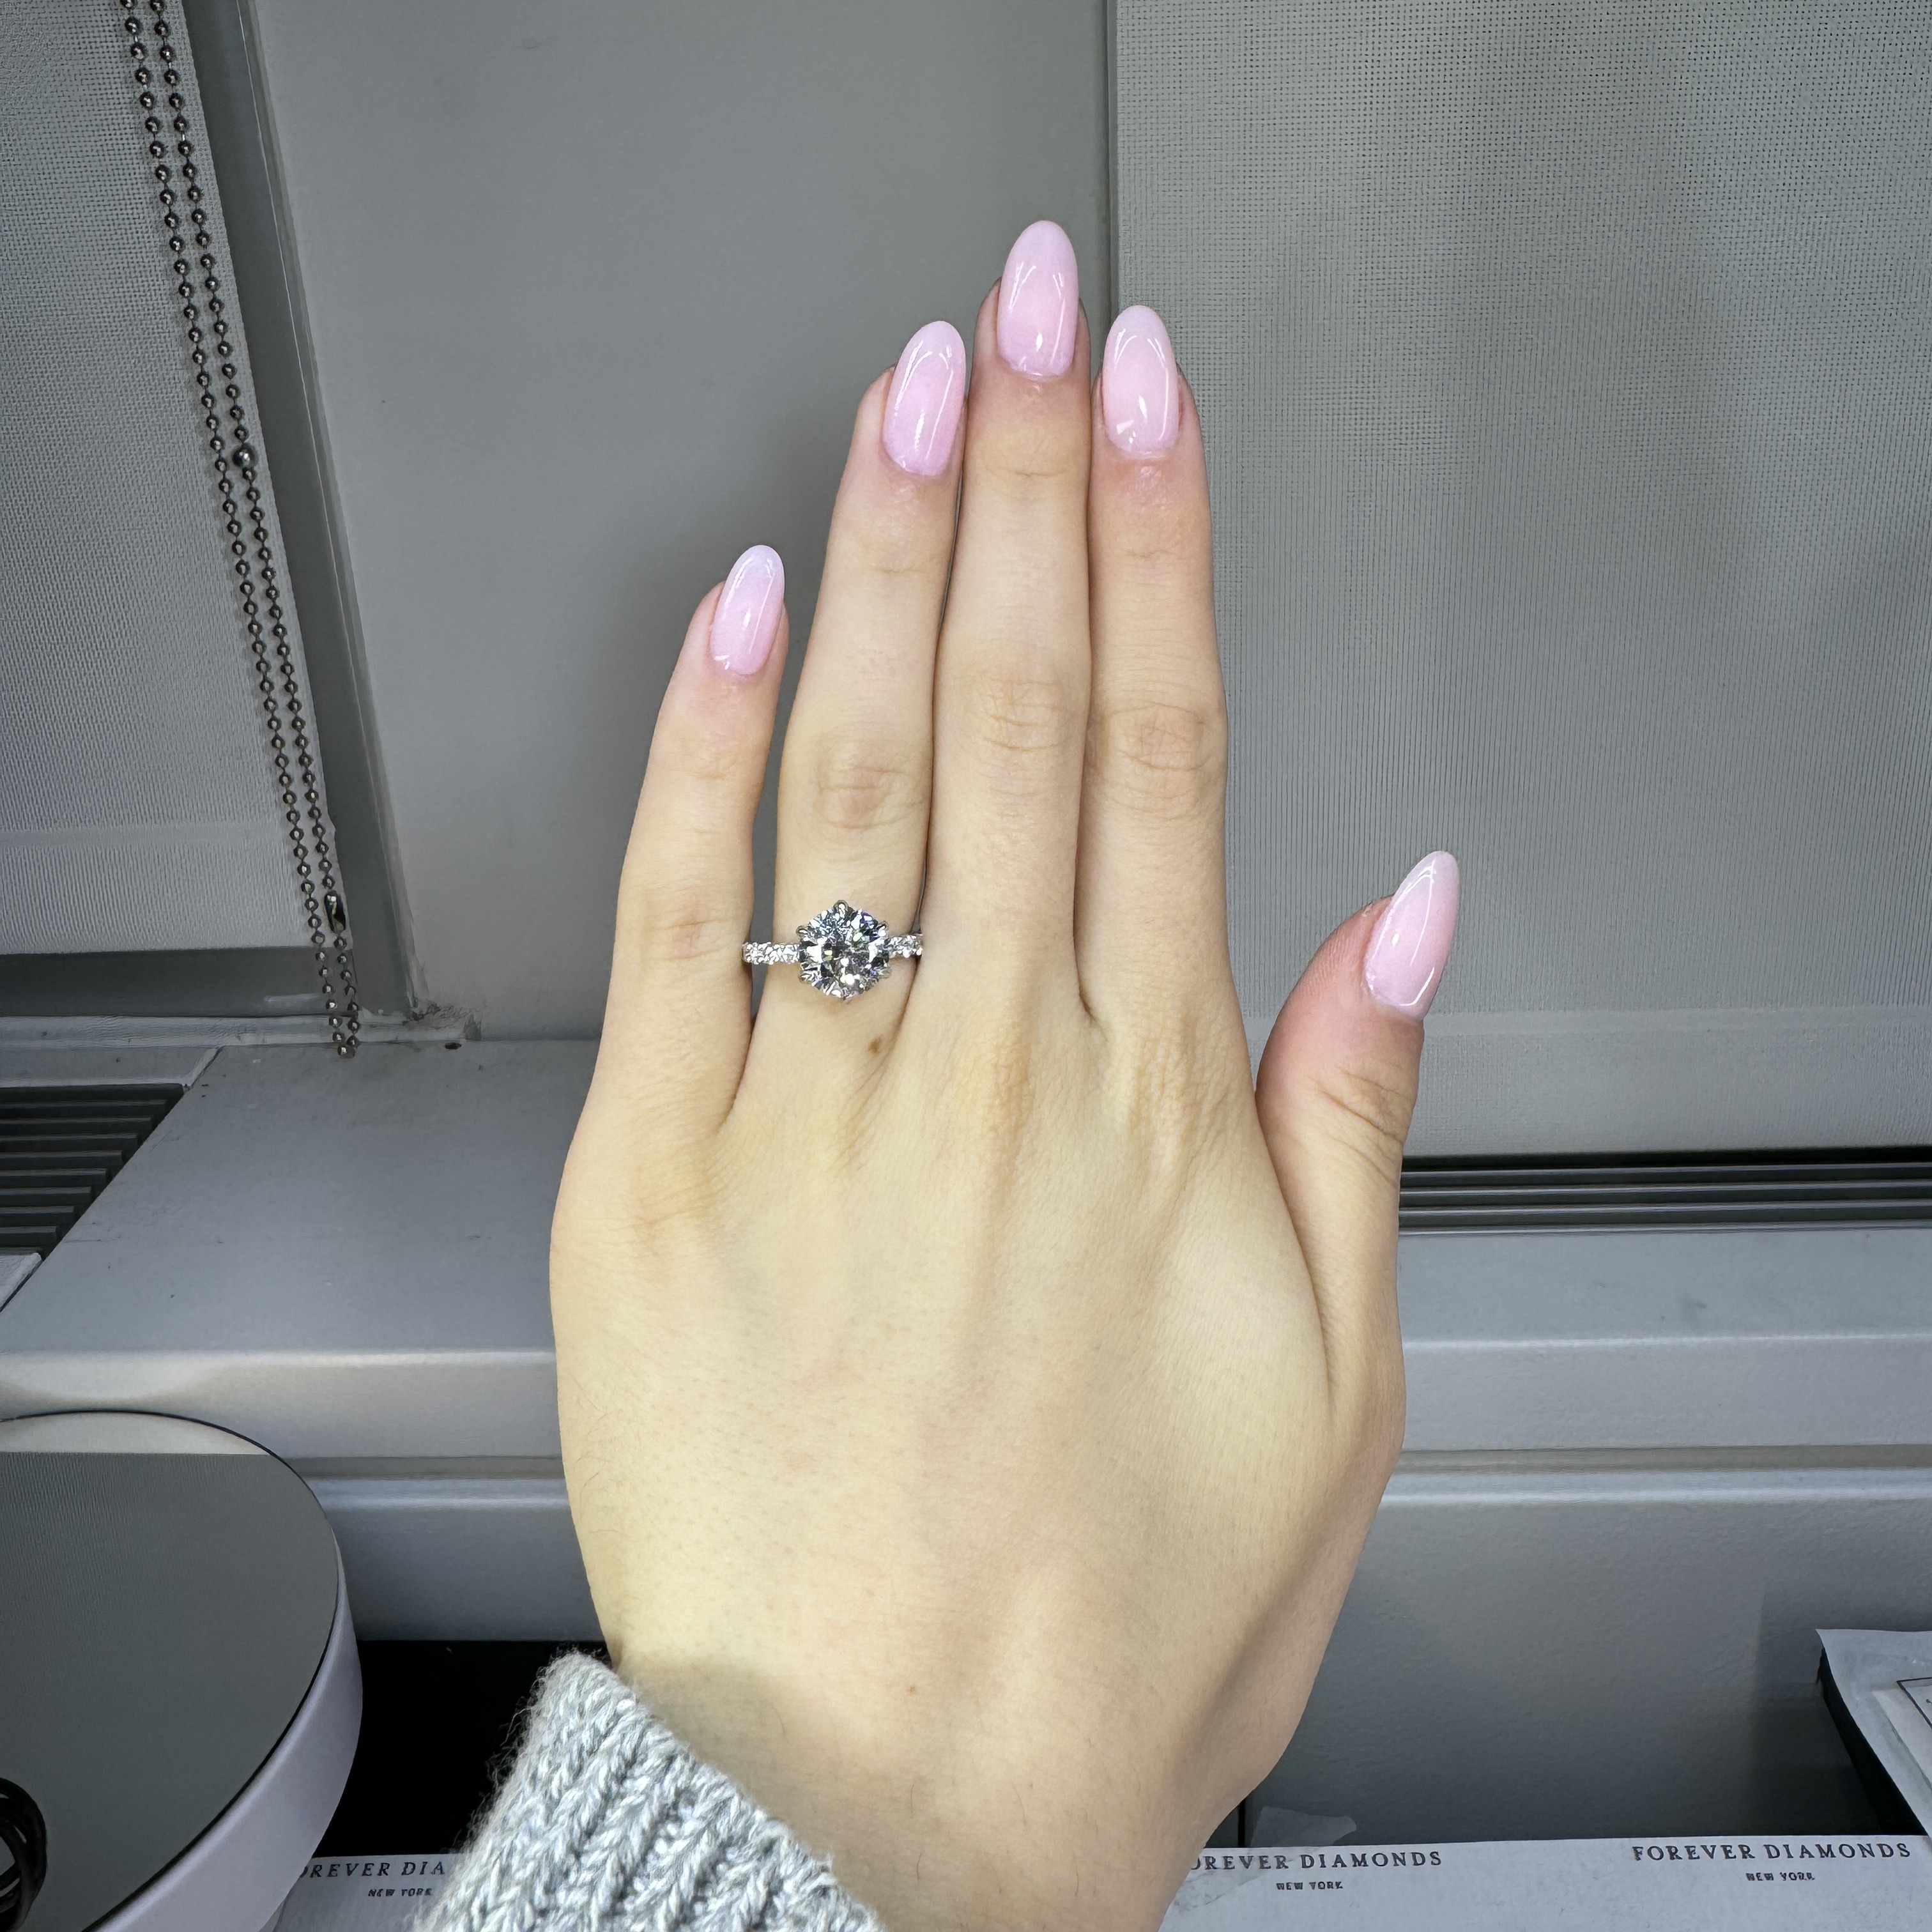 3.18ct D VS1 Round "Vivian" Engagement Ring Forever Diamonds New York, NY